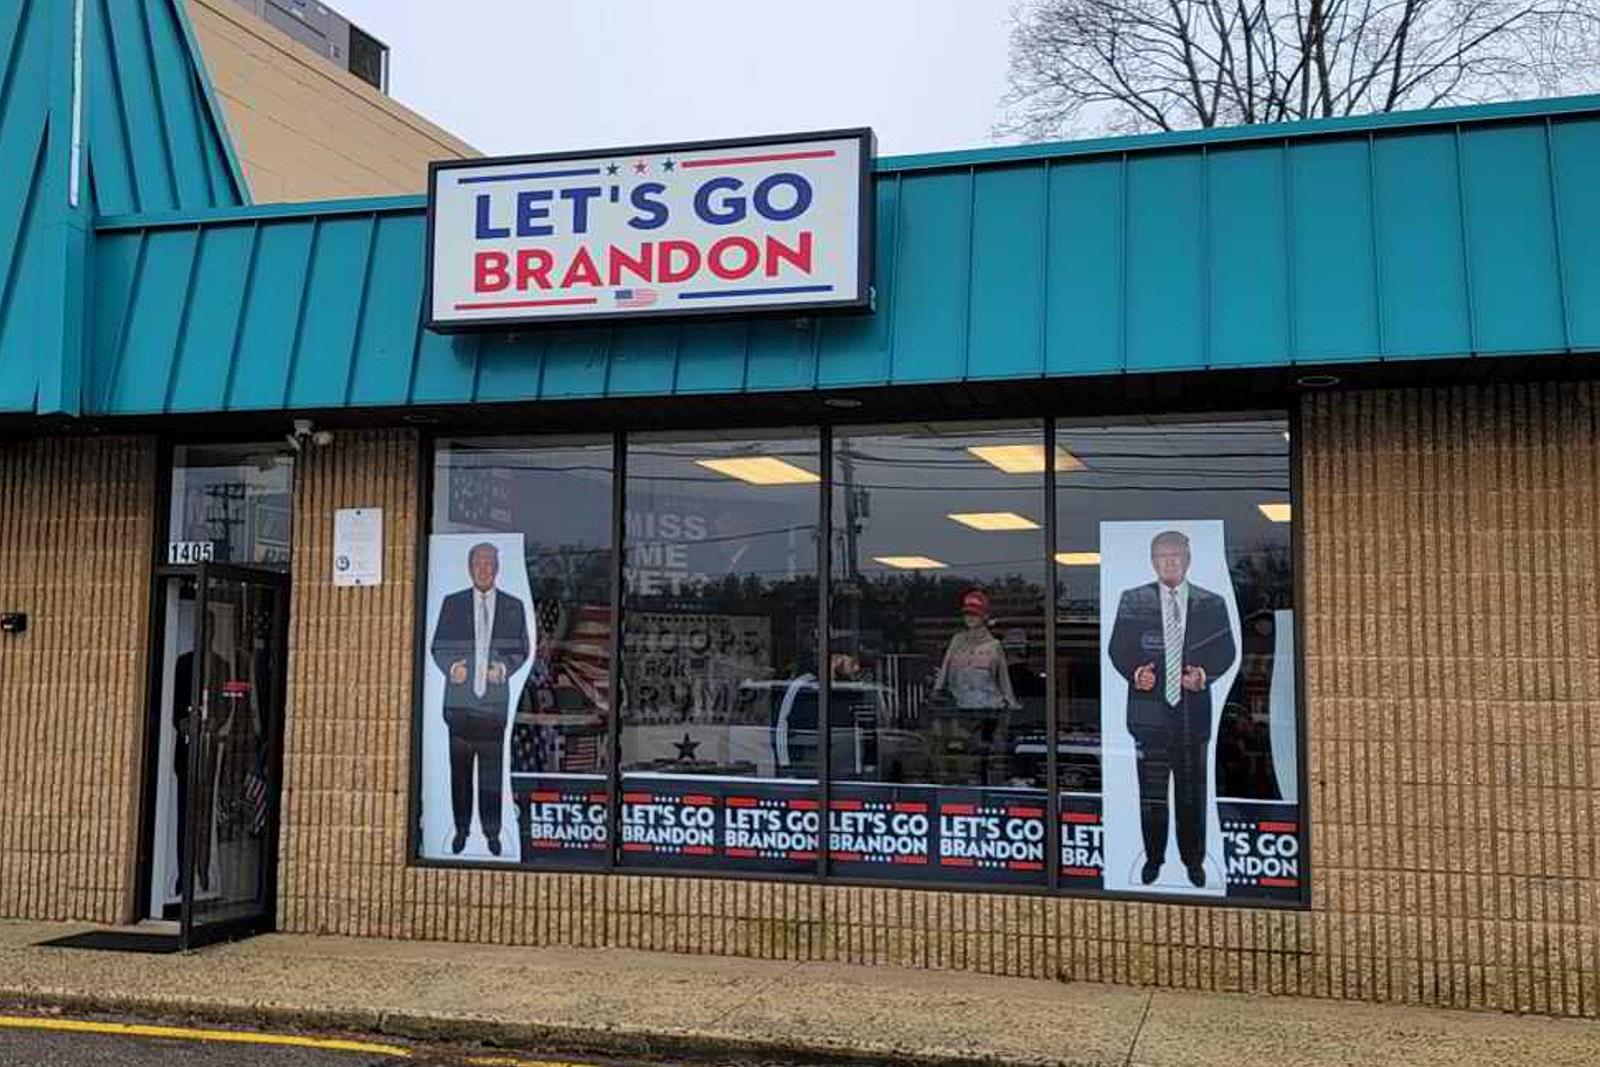 Let's Go Brandon' store officially open in Toms River, NJ